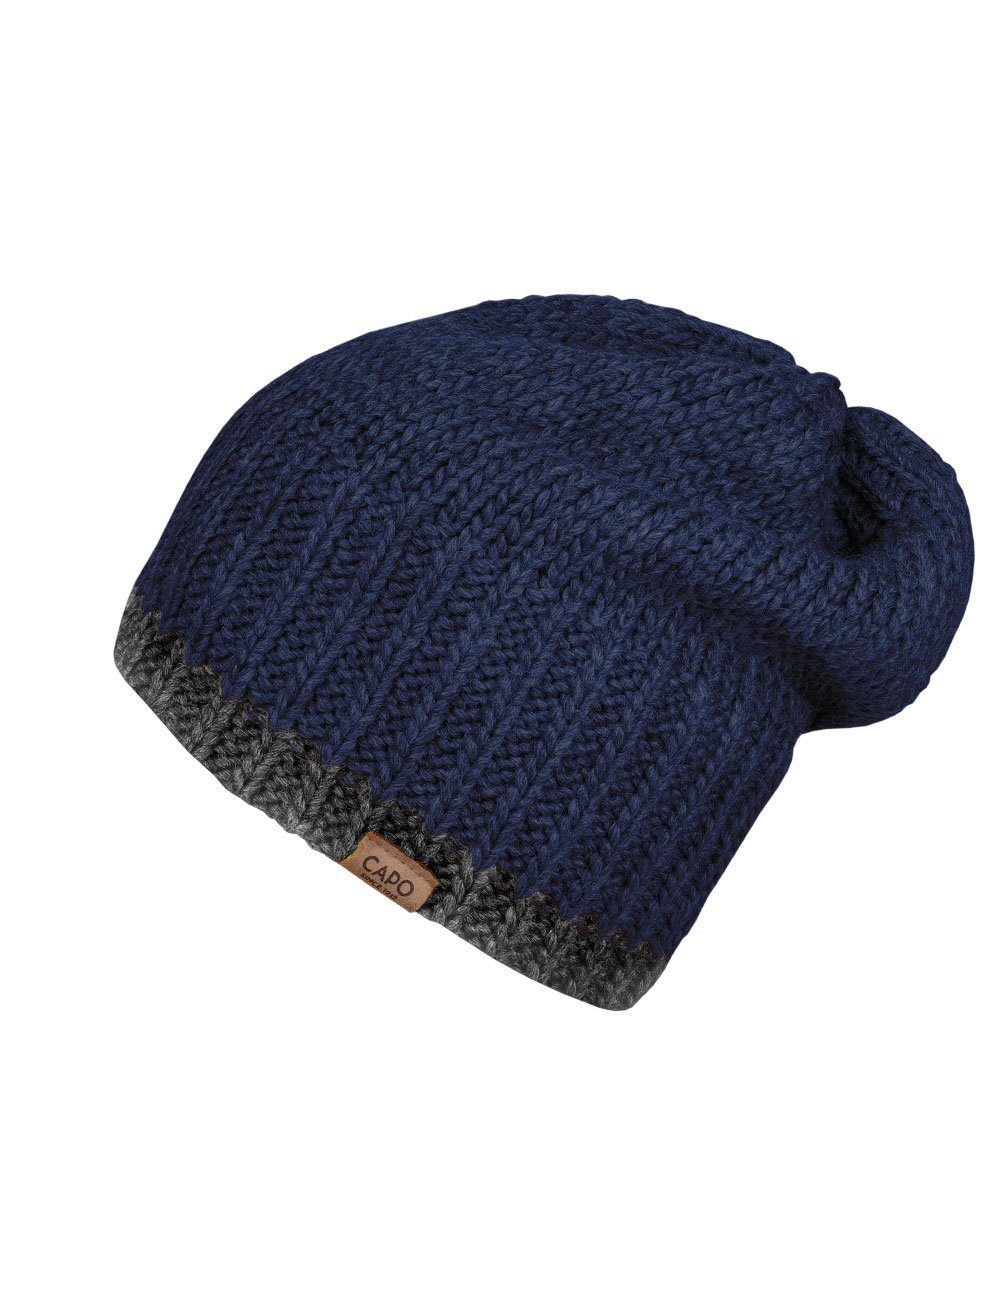 CAPO Strickmütze CAPO-KEELIN CAP knitted cap, short fleece lining Made in Germany navy